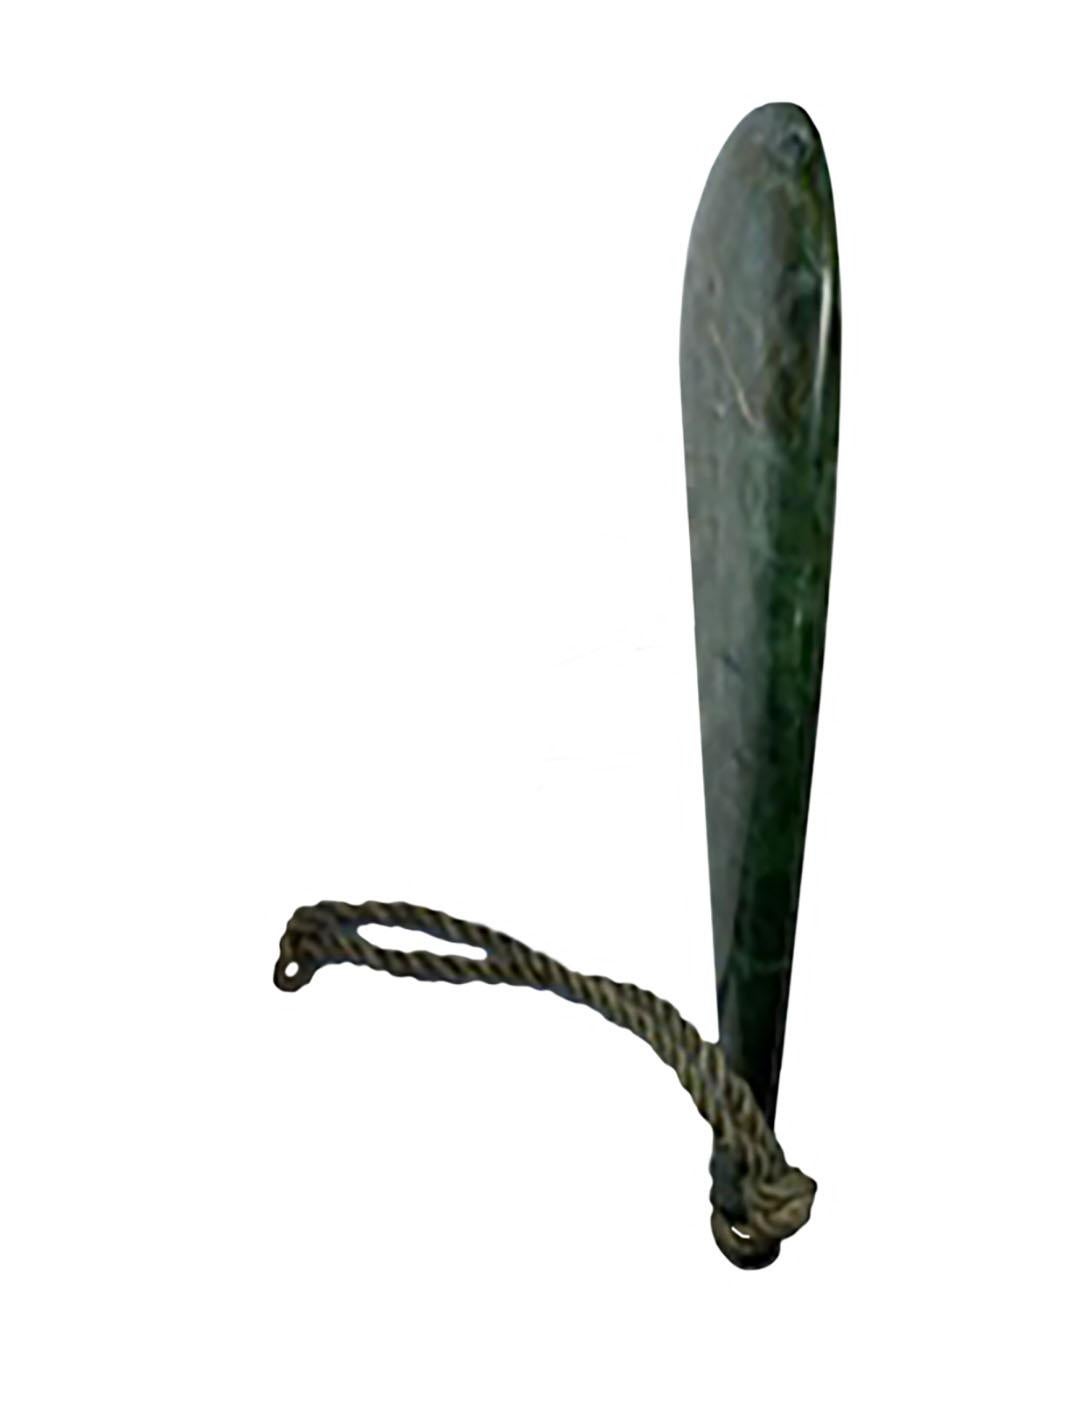 patu maori weapon